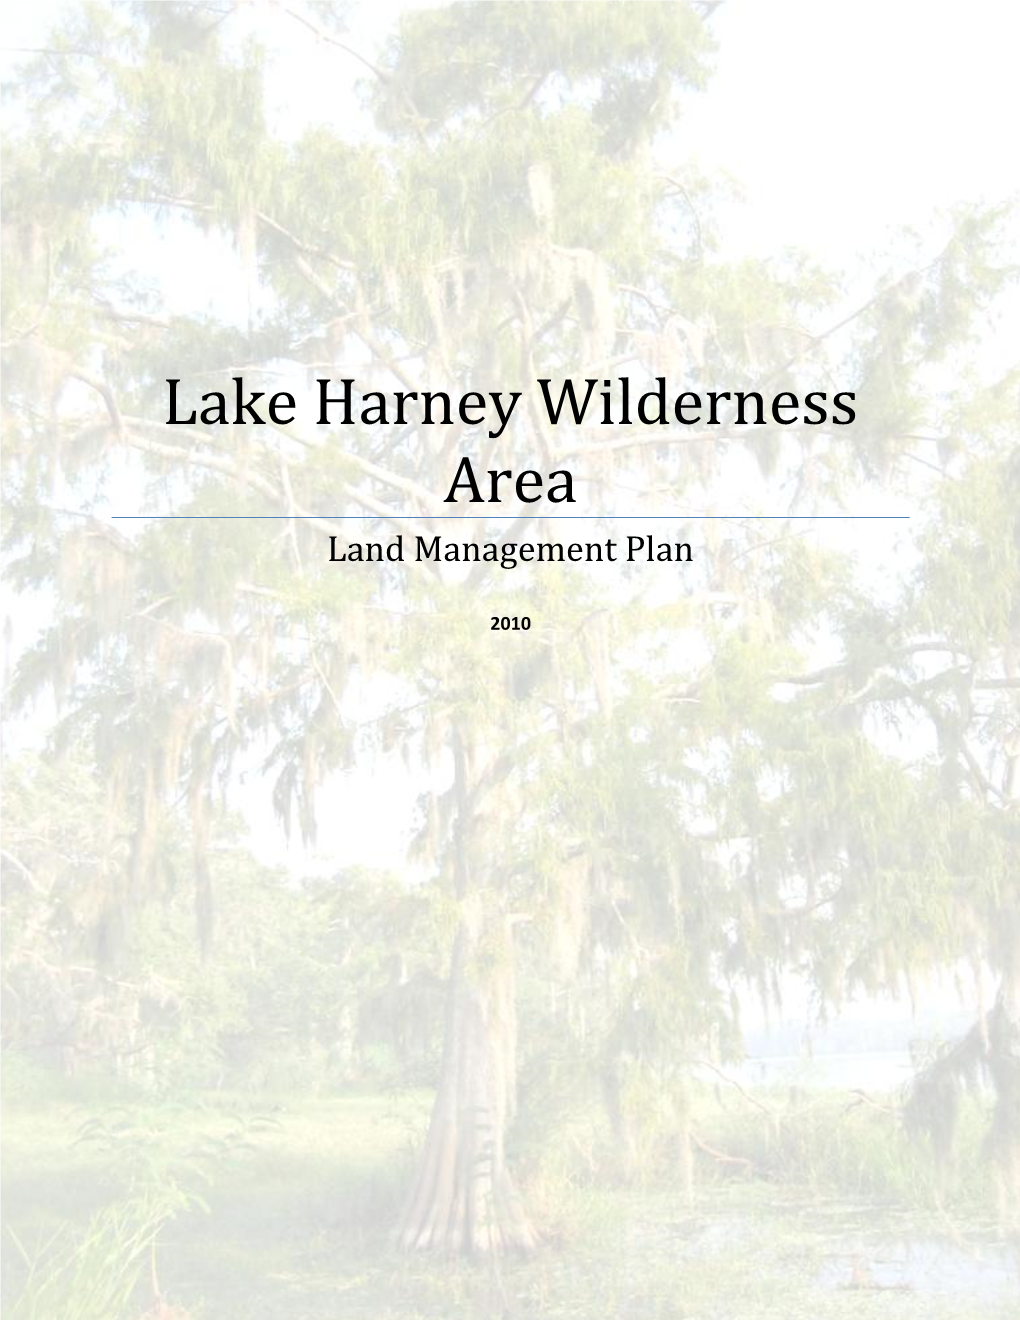 Lake Harney Wilderness Area Land Management Plan